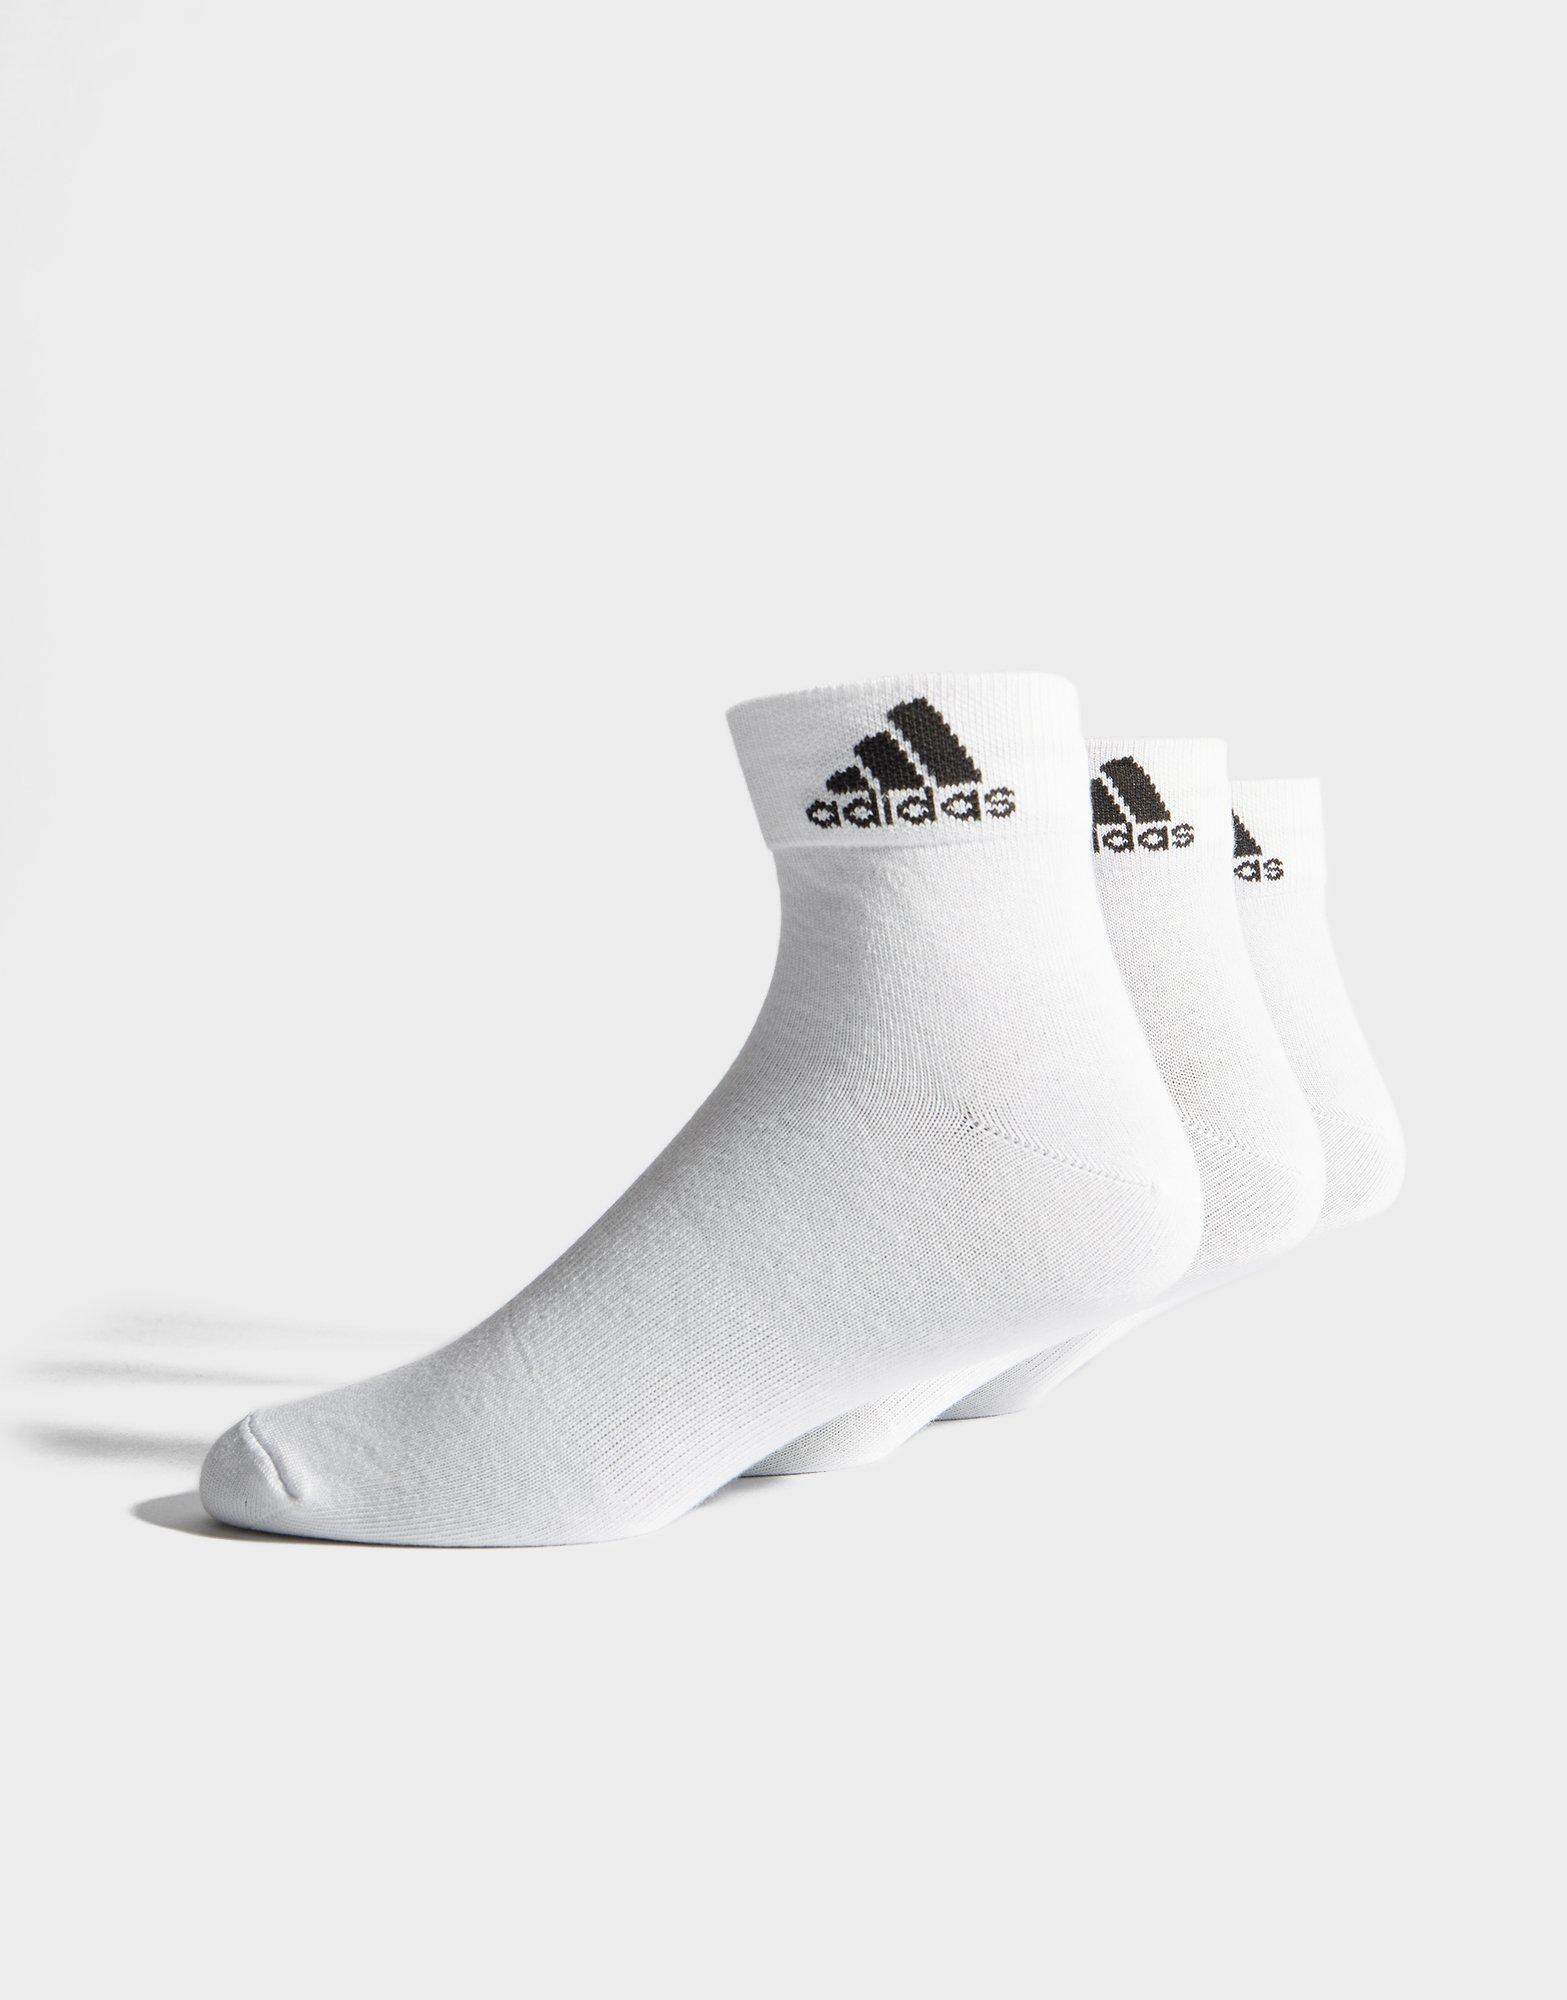 jd adidas socks